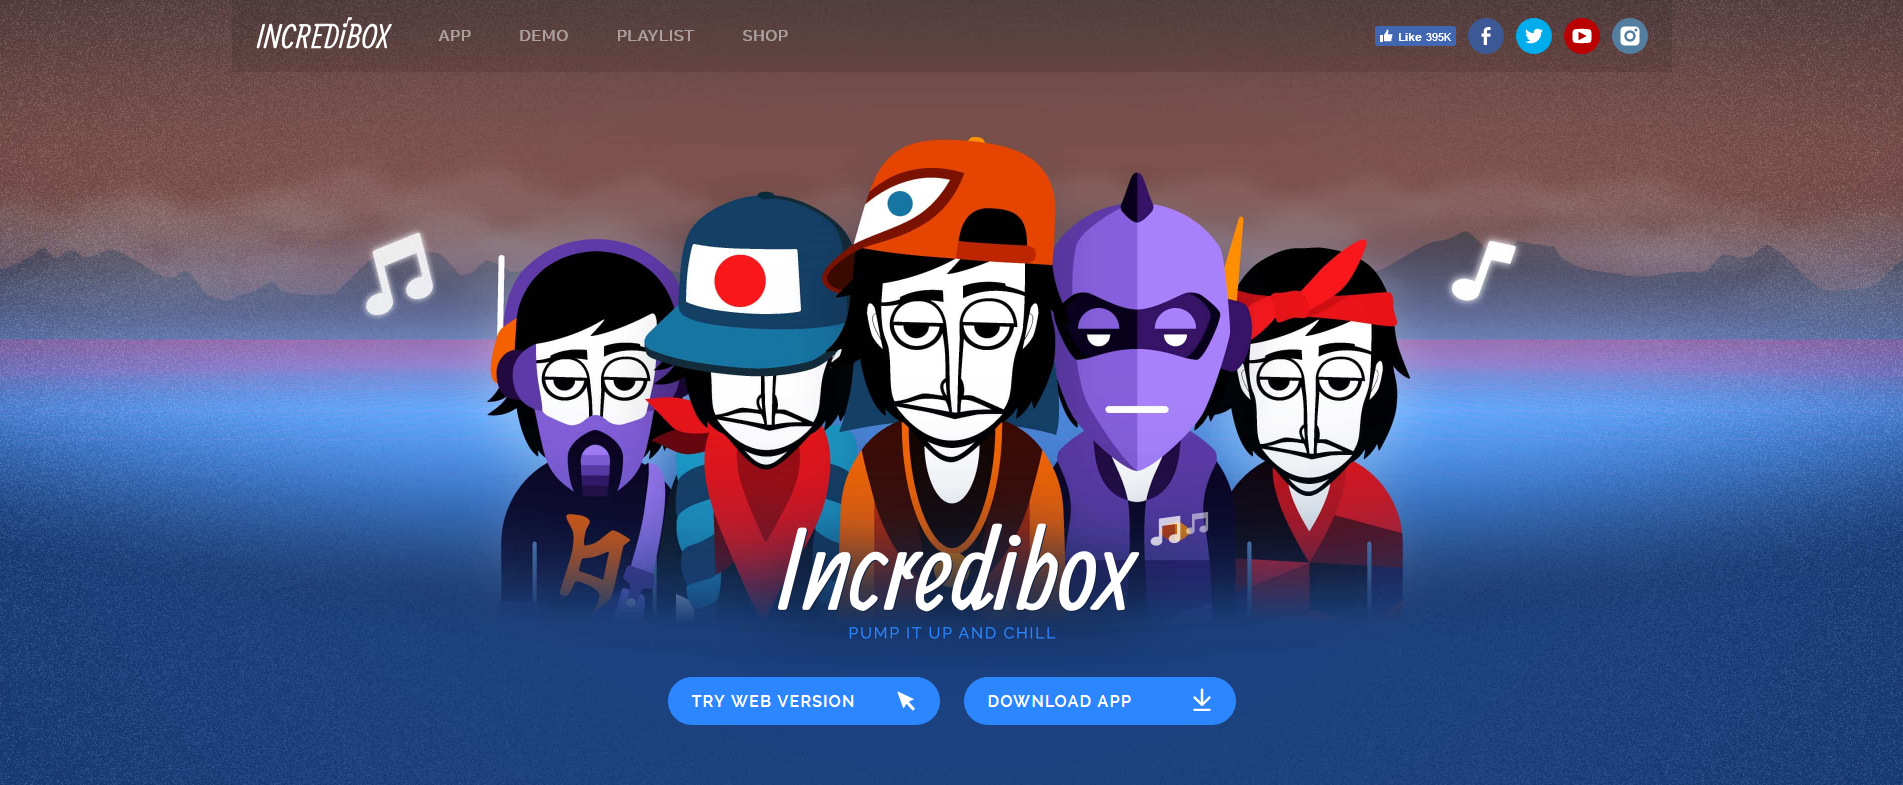 incredibox v3 play